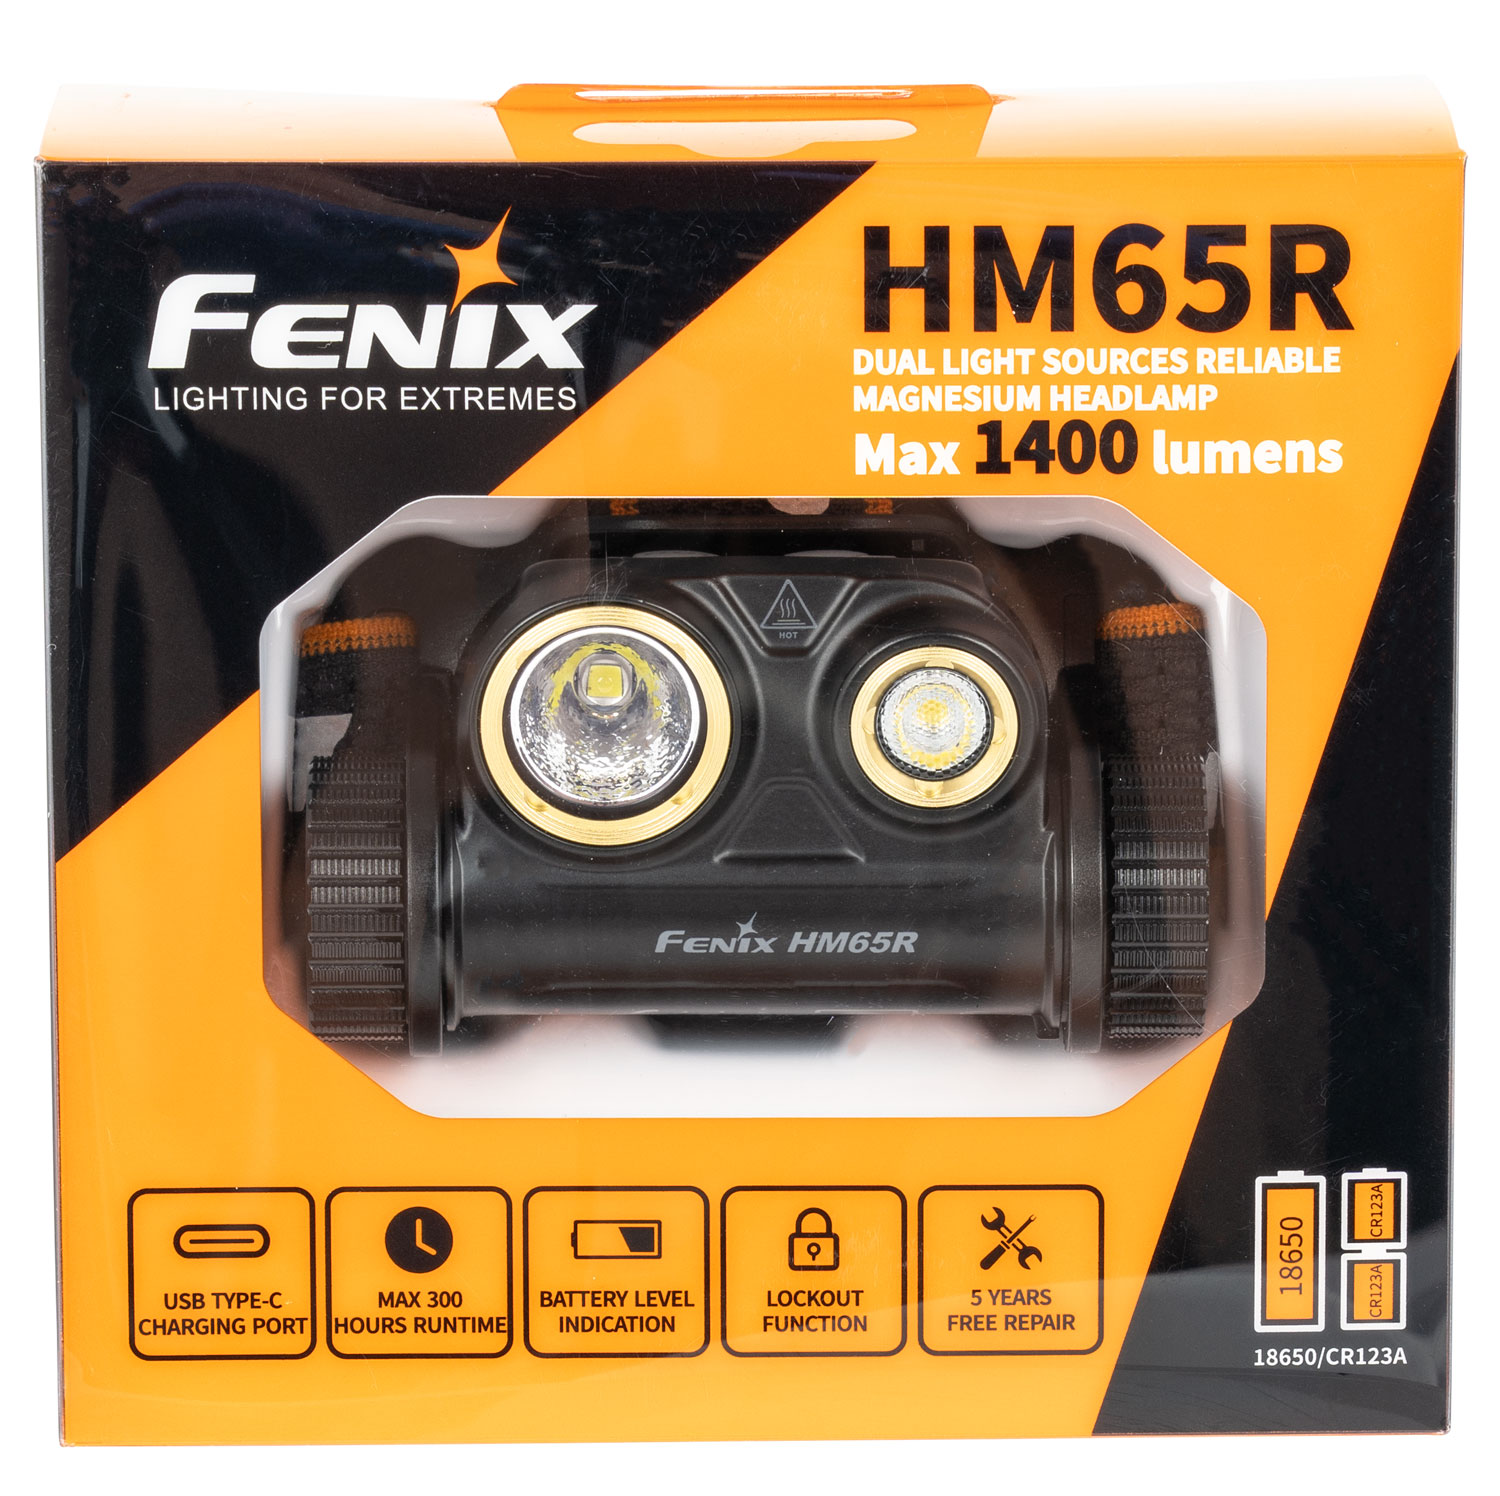 Fenix HM65R Headlamp  <br>  1400 Lumen w/ E01 V2.0 Light